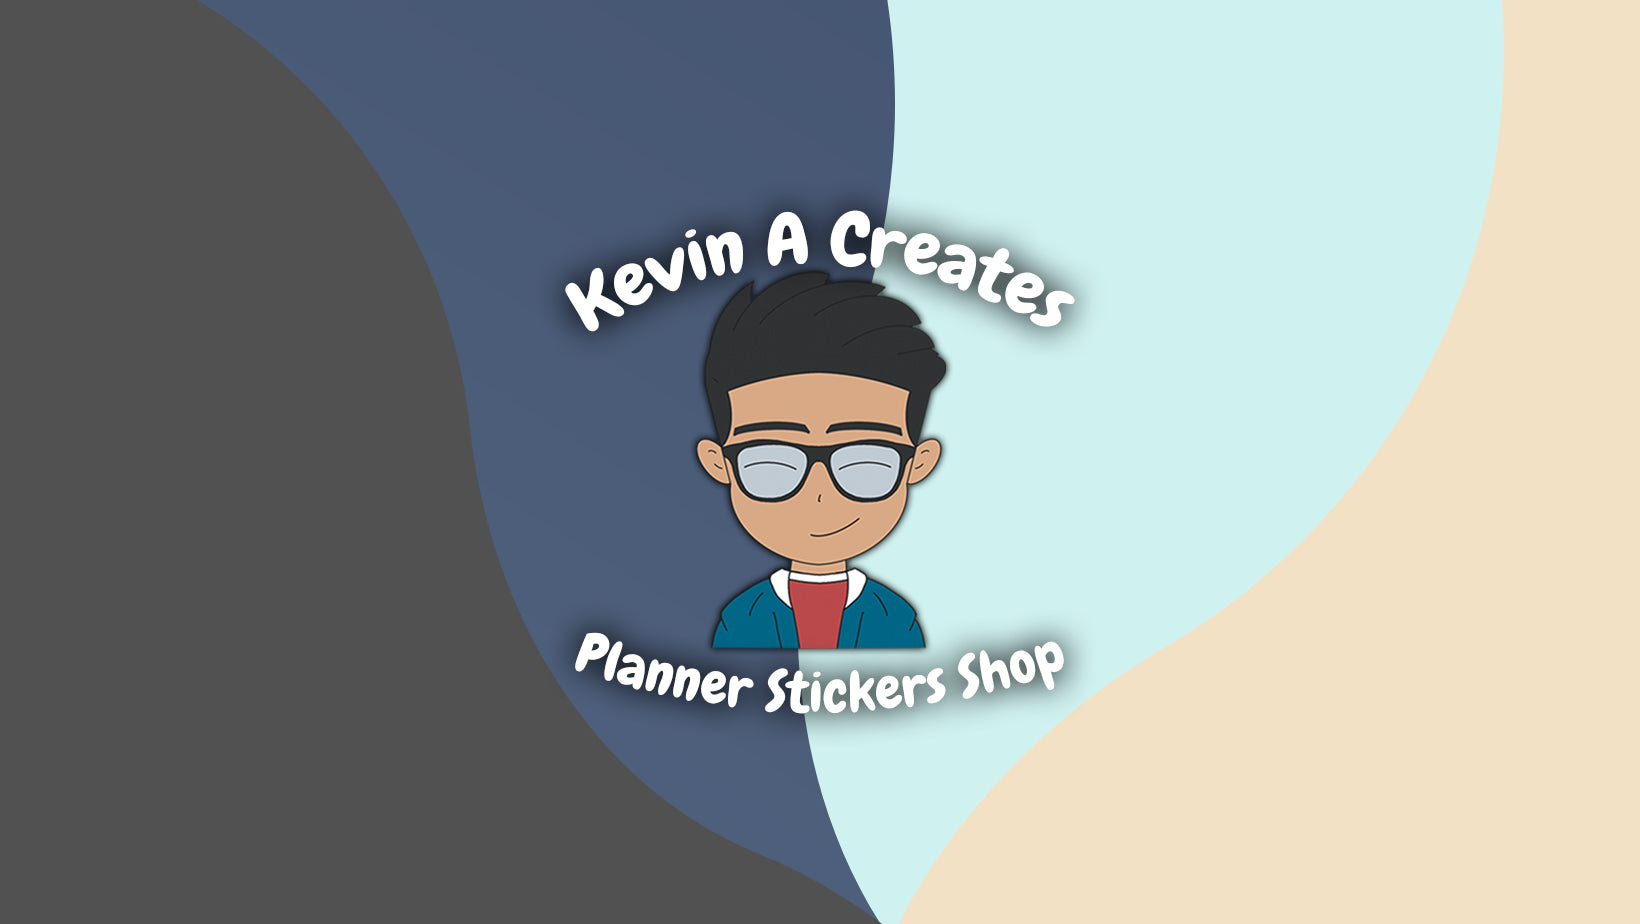 Kevin A Creates